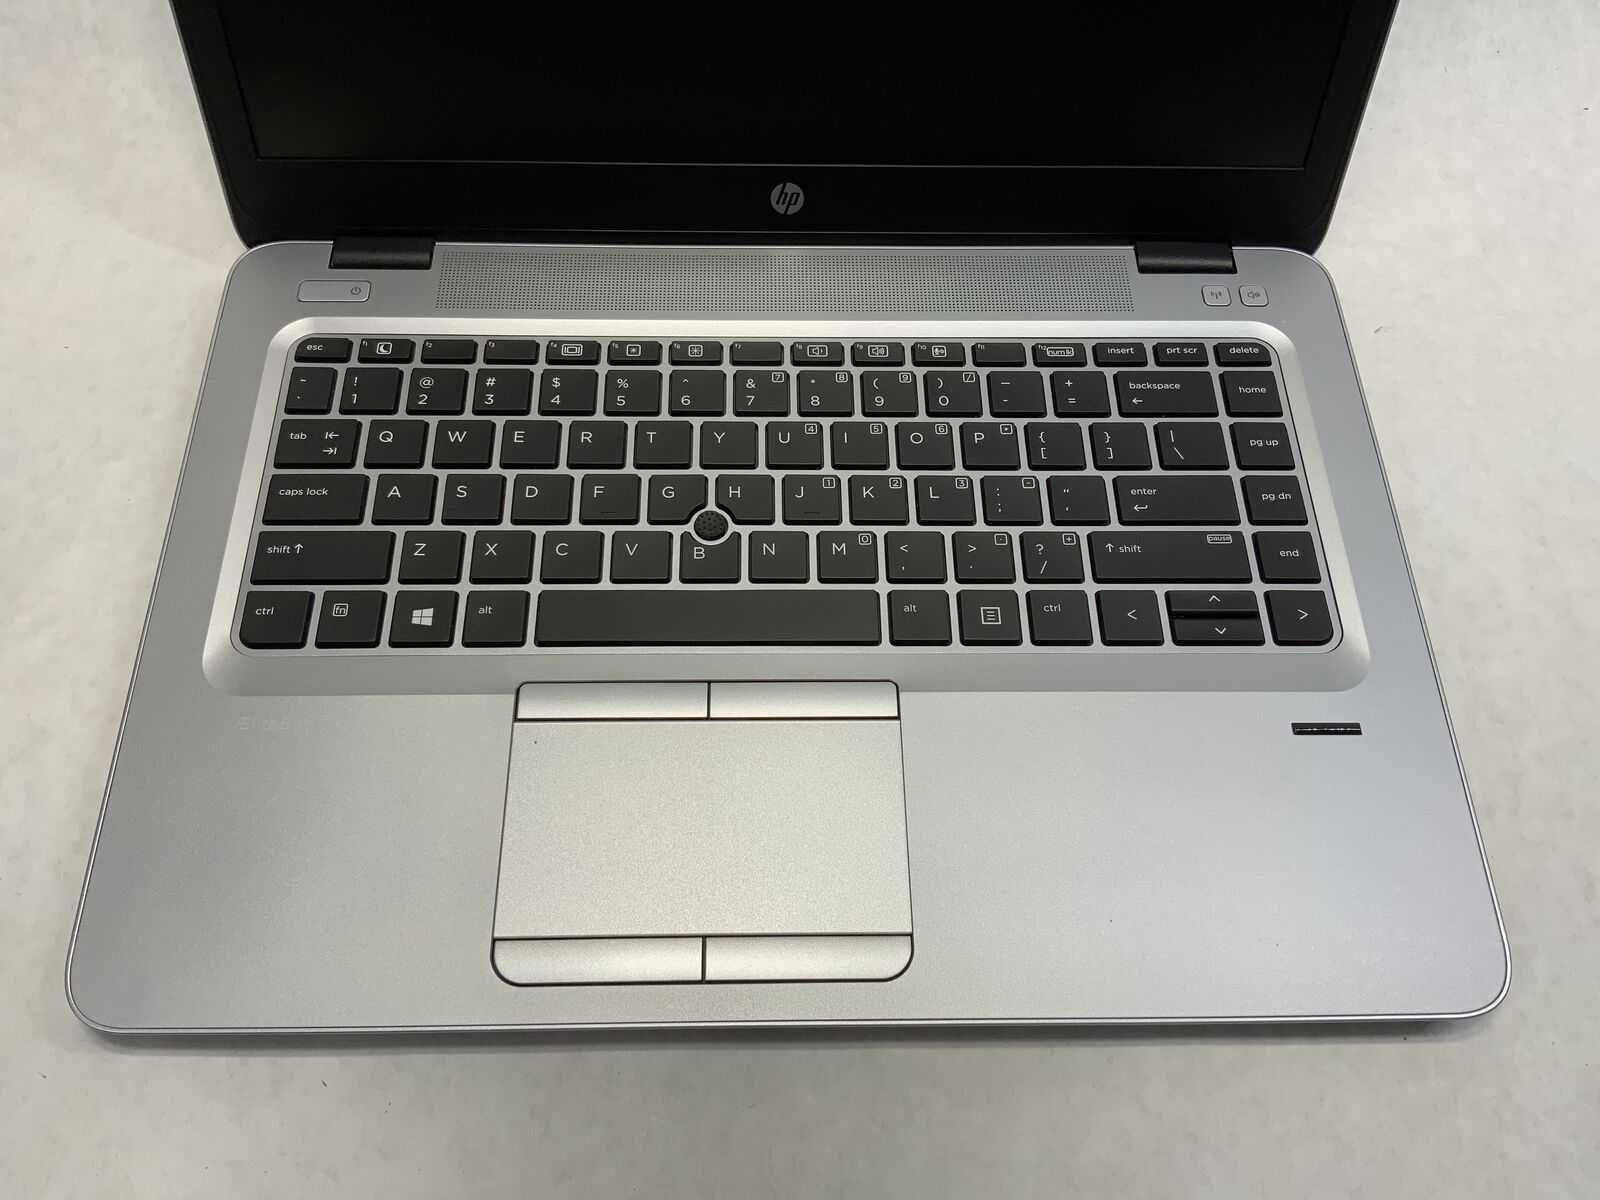 Лаптоп HP 745 G4 A10-8700B 8GB 256GB SSD AMD R6 Graphics с Windows 10